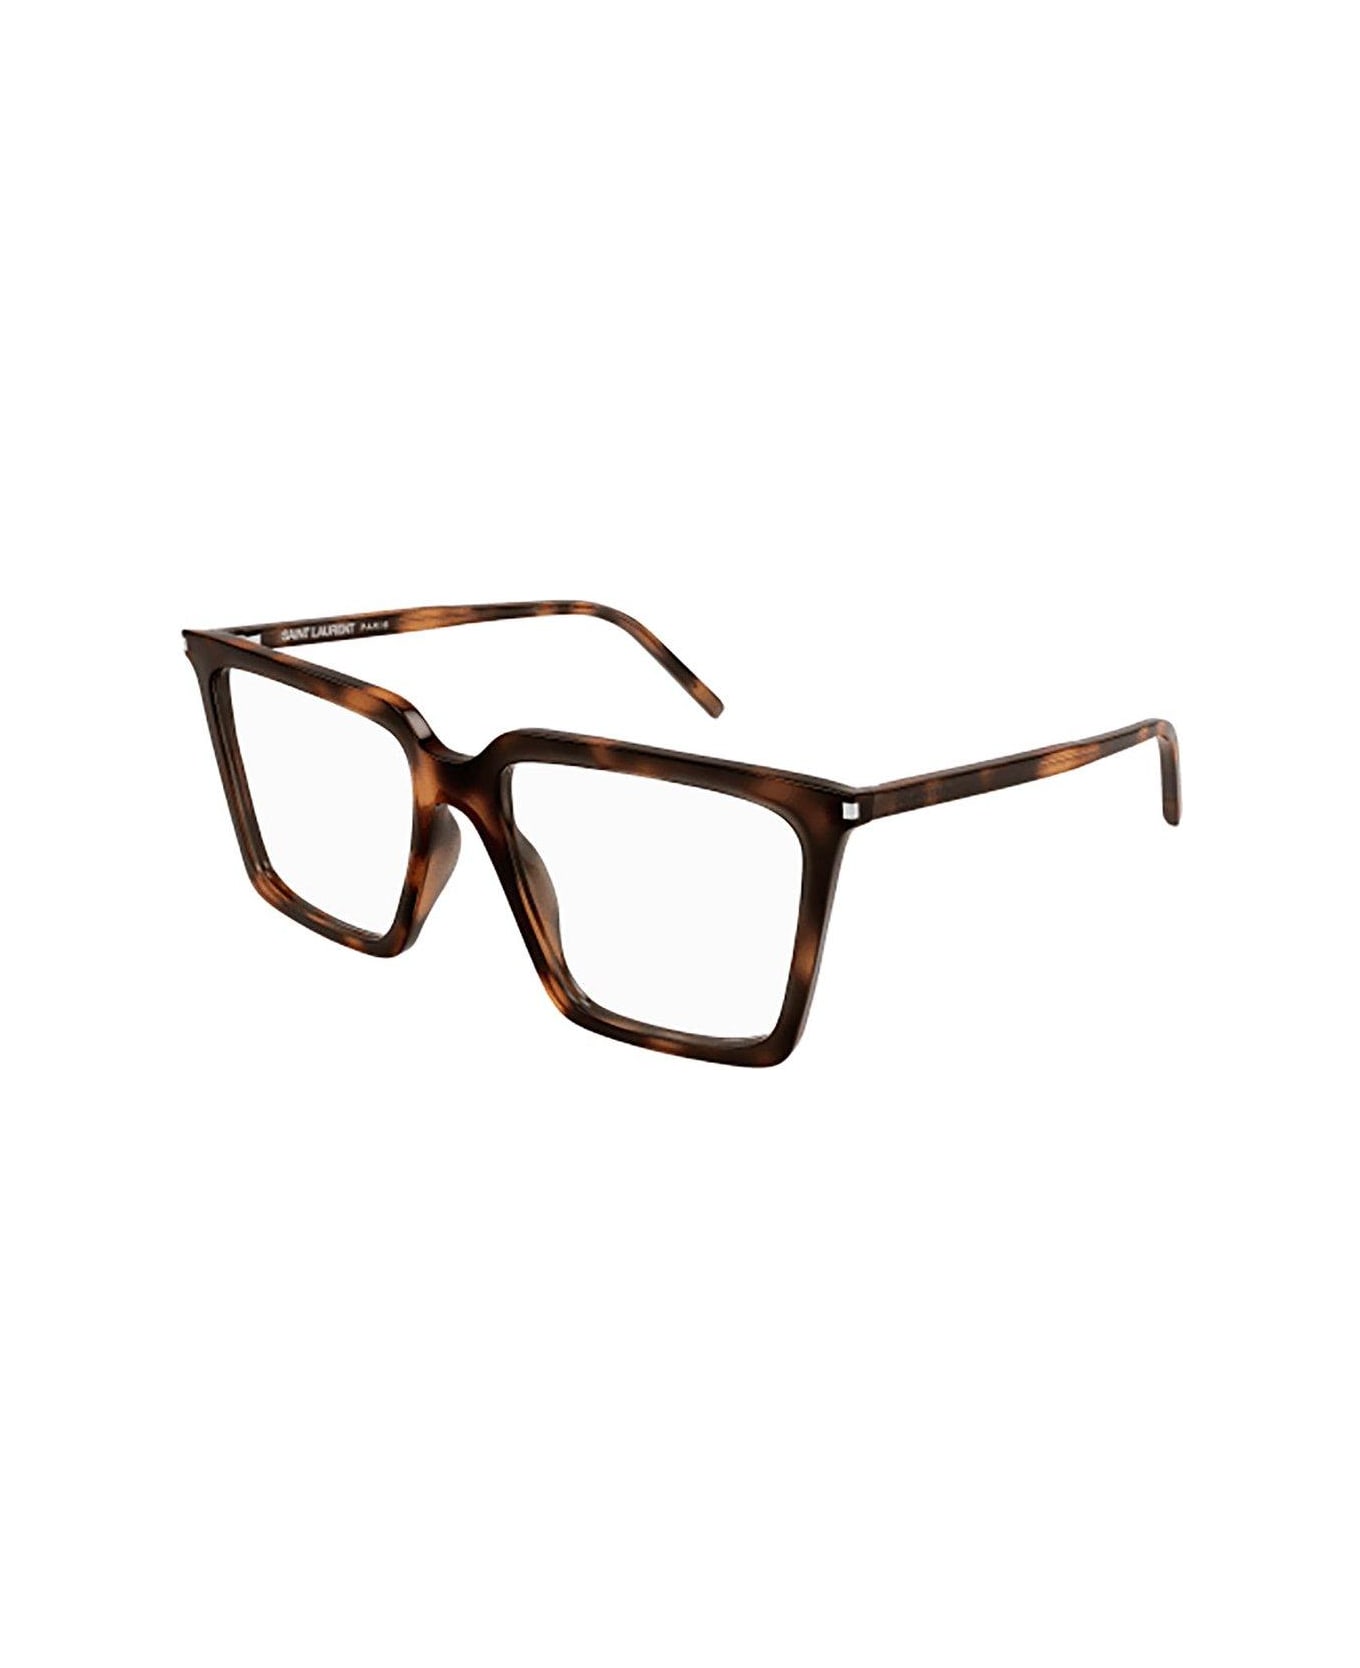 Saint Laurent Eyewear Square Frame Glasses - 002 havana havana transpa